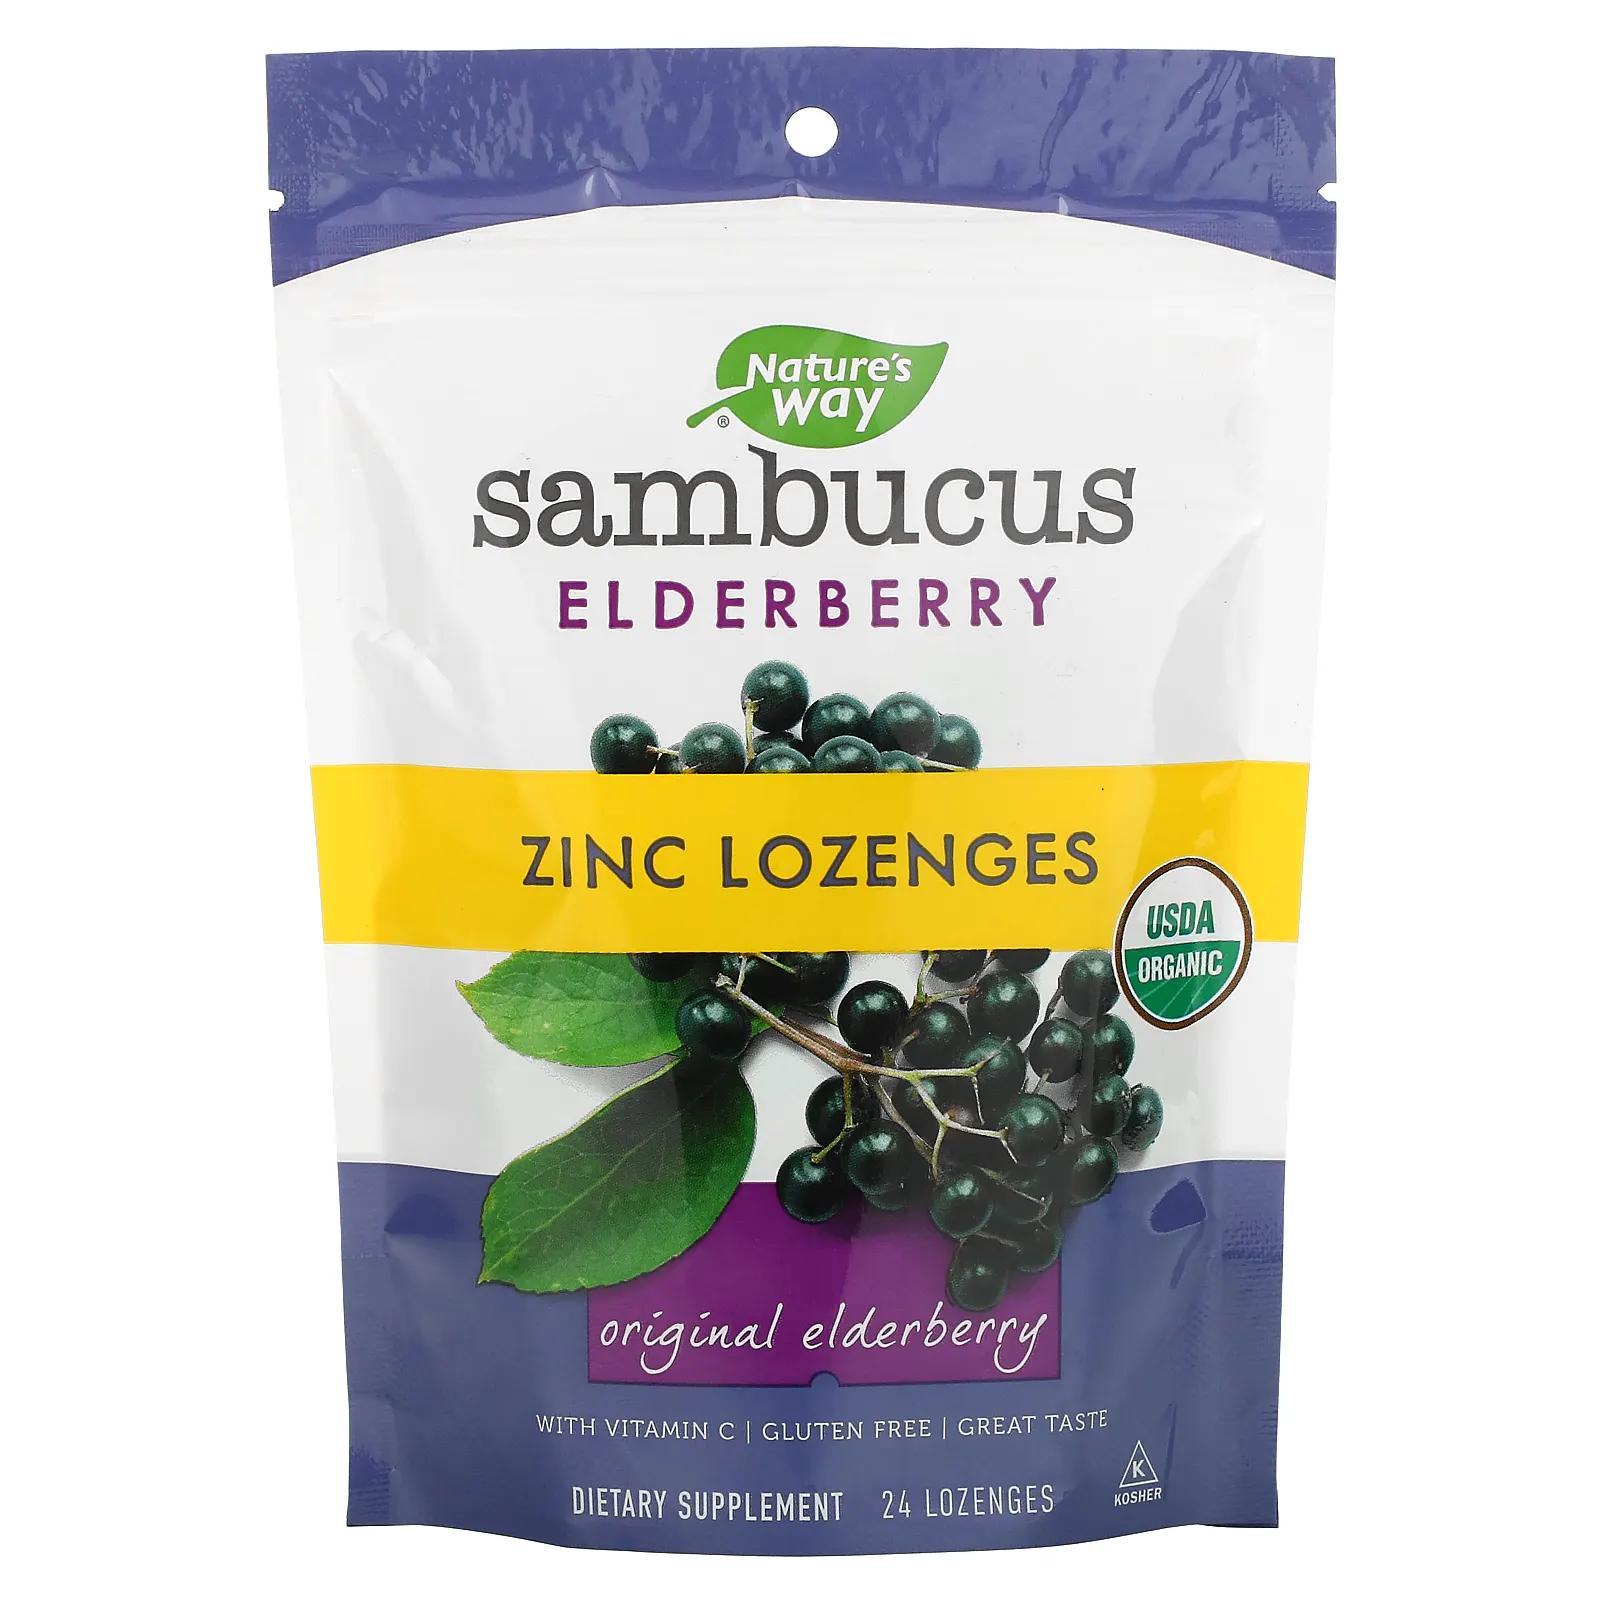 Nature's Way Organic Sambucus Zinc Lozenges Berry Flavor 24 Lozenges леденцы nature s way sambucus elderberry organic 24 штуки